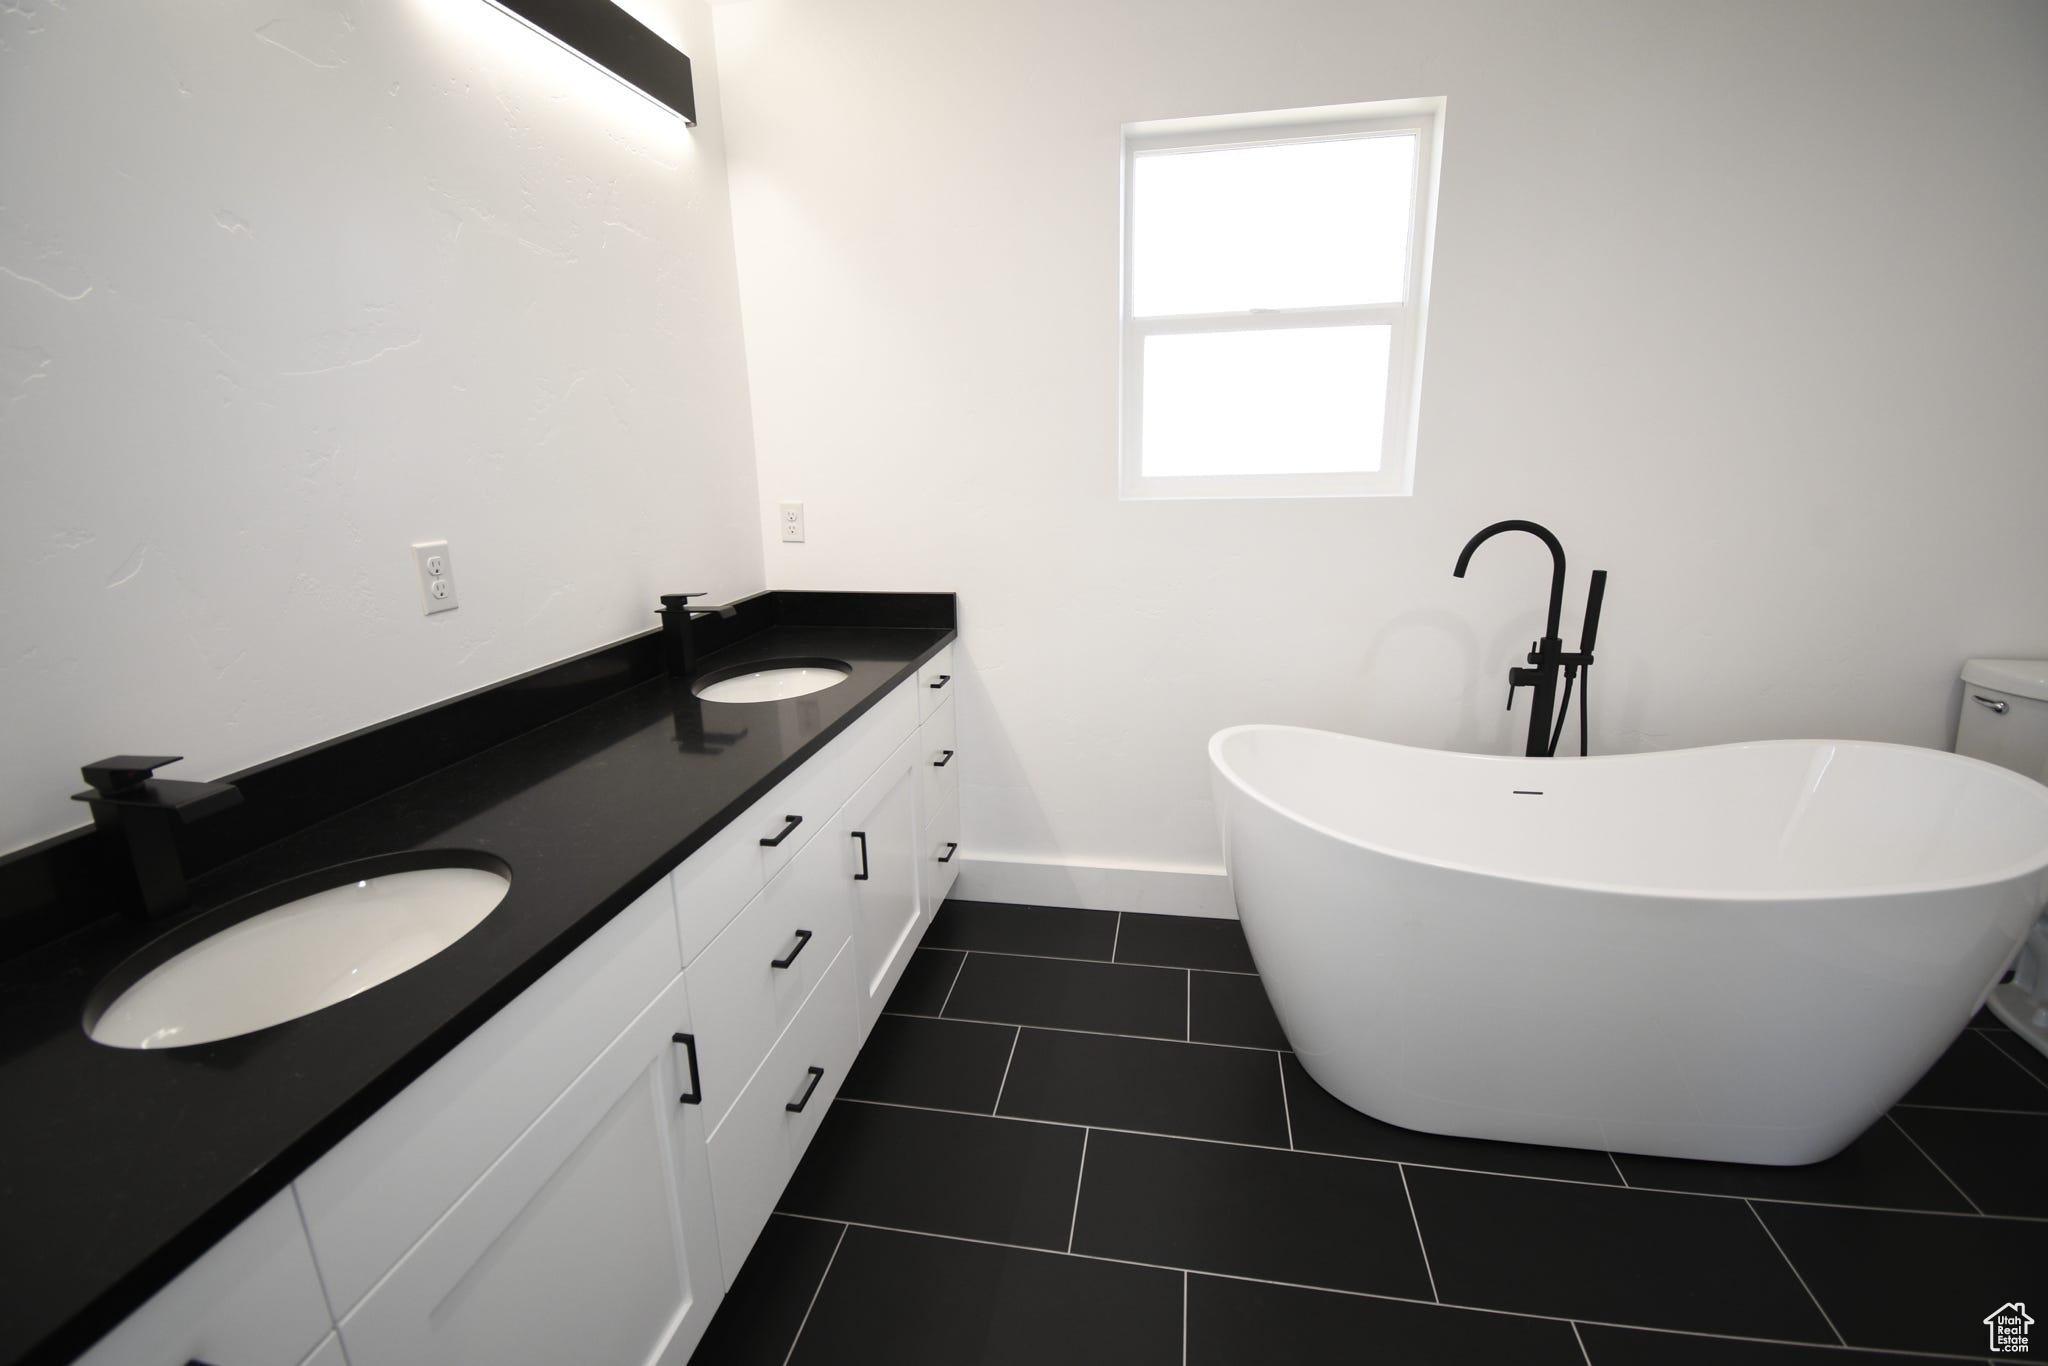 Bathroom featuring tile flooring and dual vanity